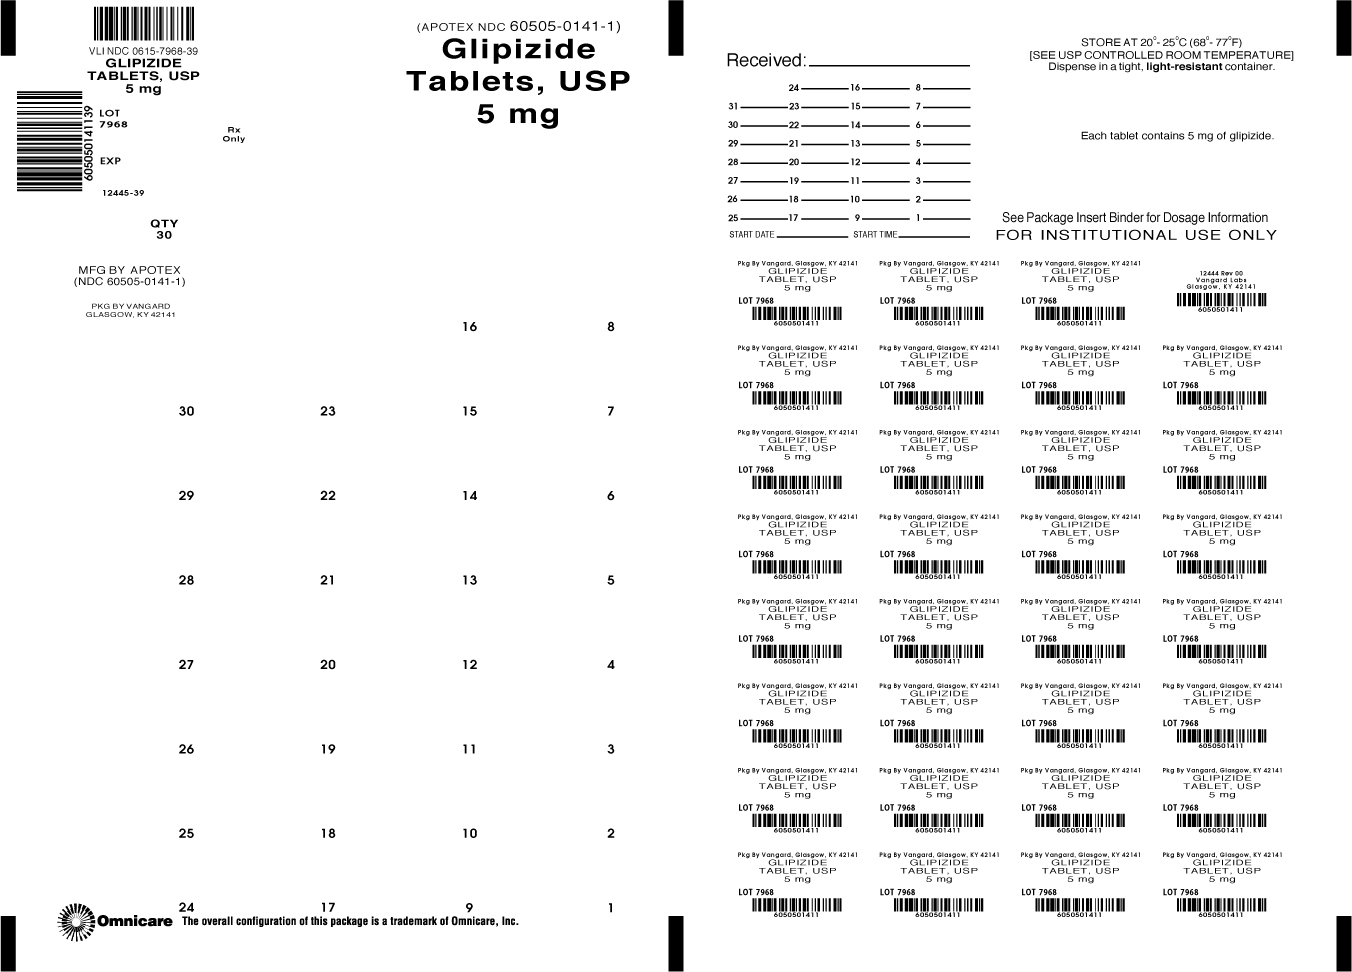 Glipizide Tabs, USP 5mg blistercard labels